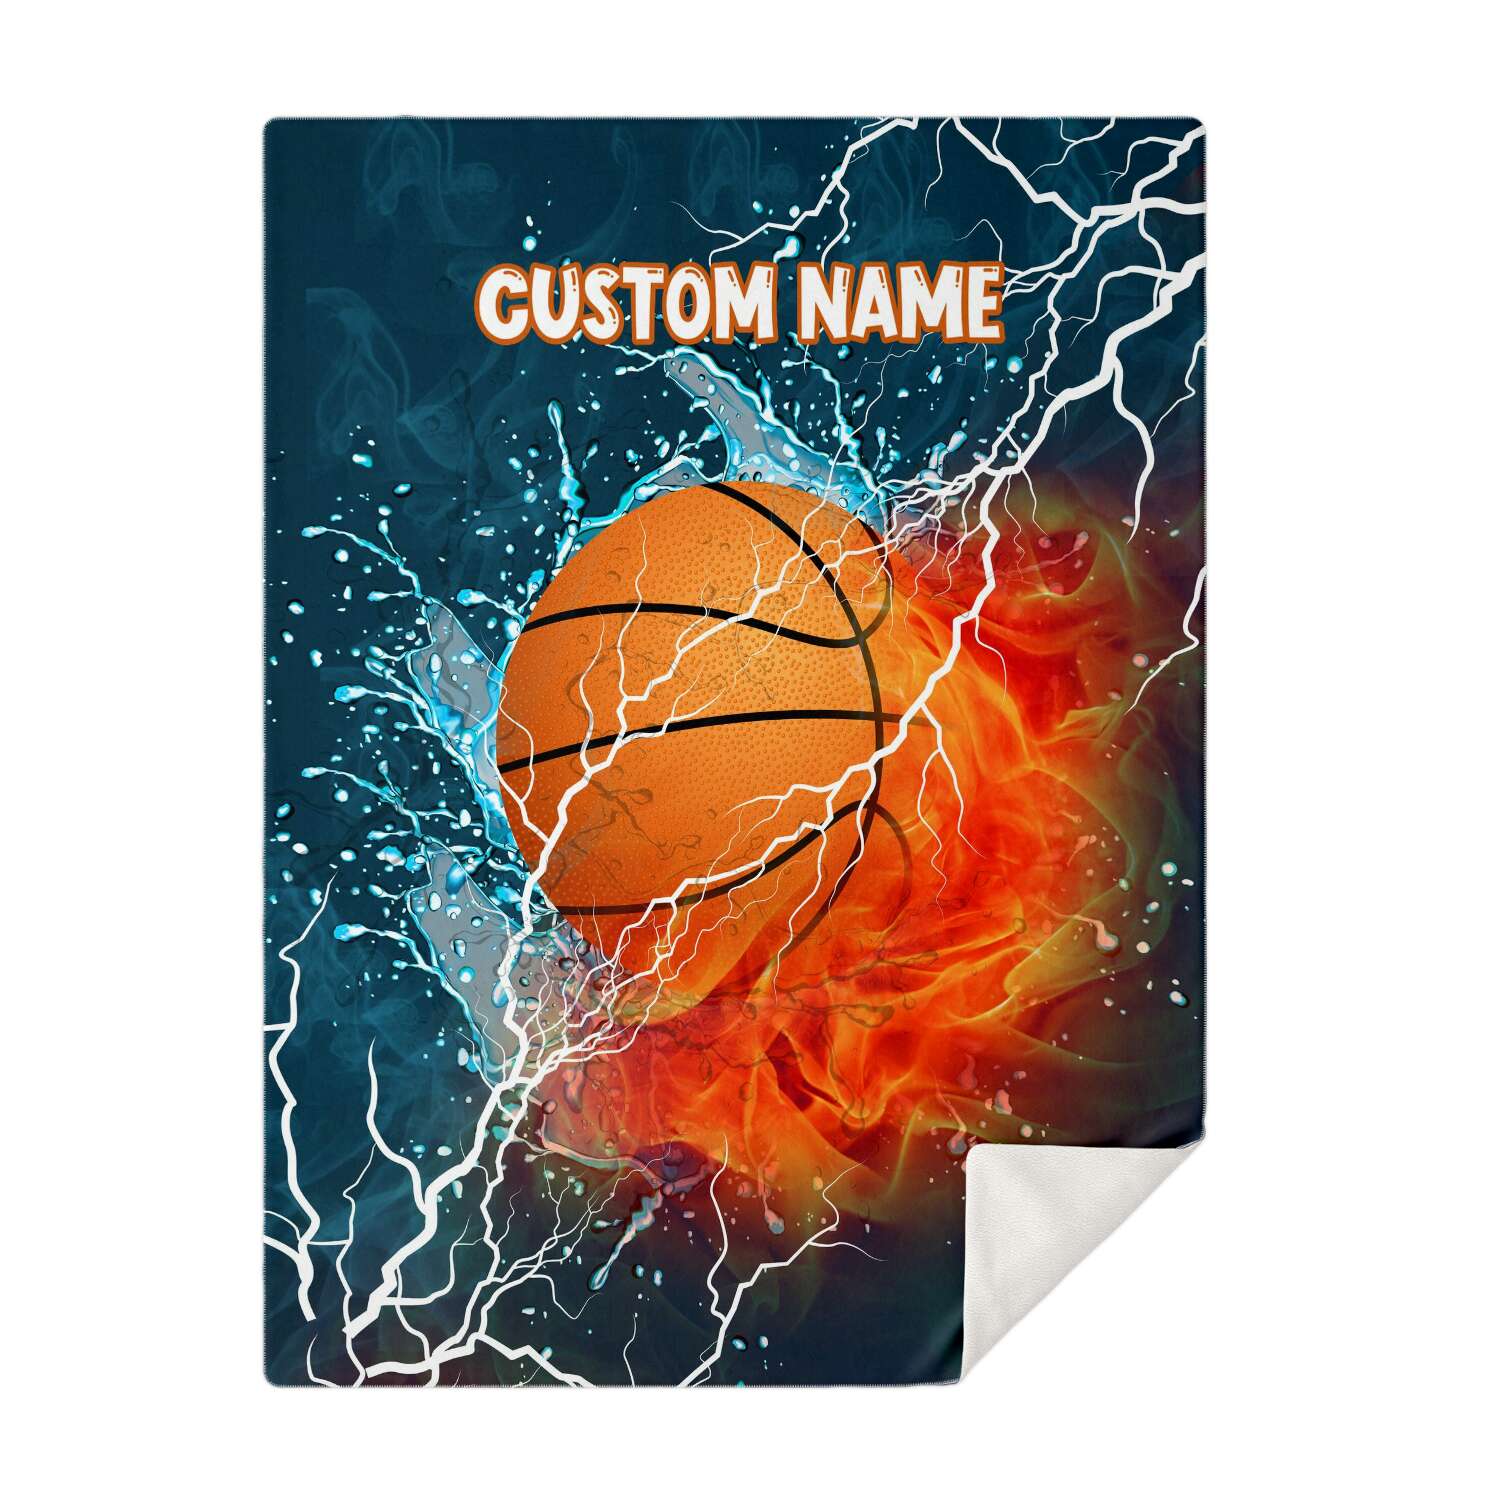 Personalized Name Basketball Blanket, Custom Name Sports Blanket for Boys & Girls